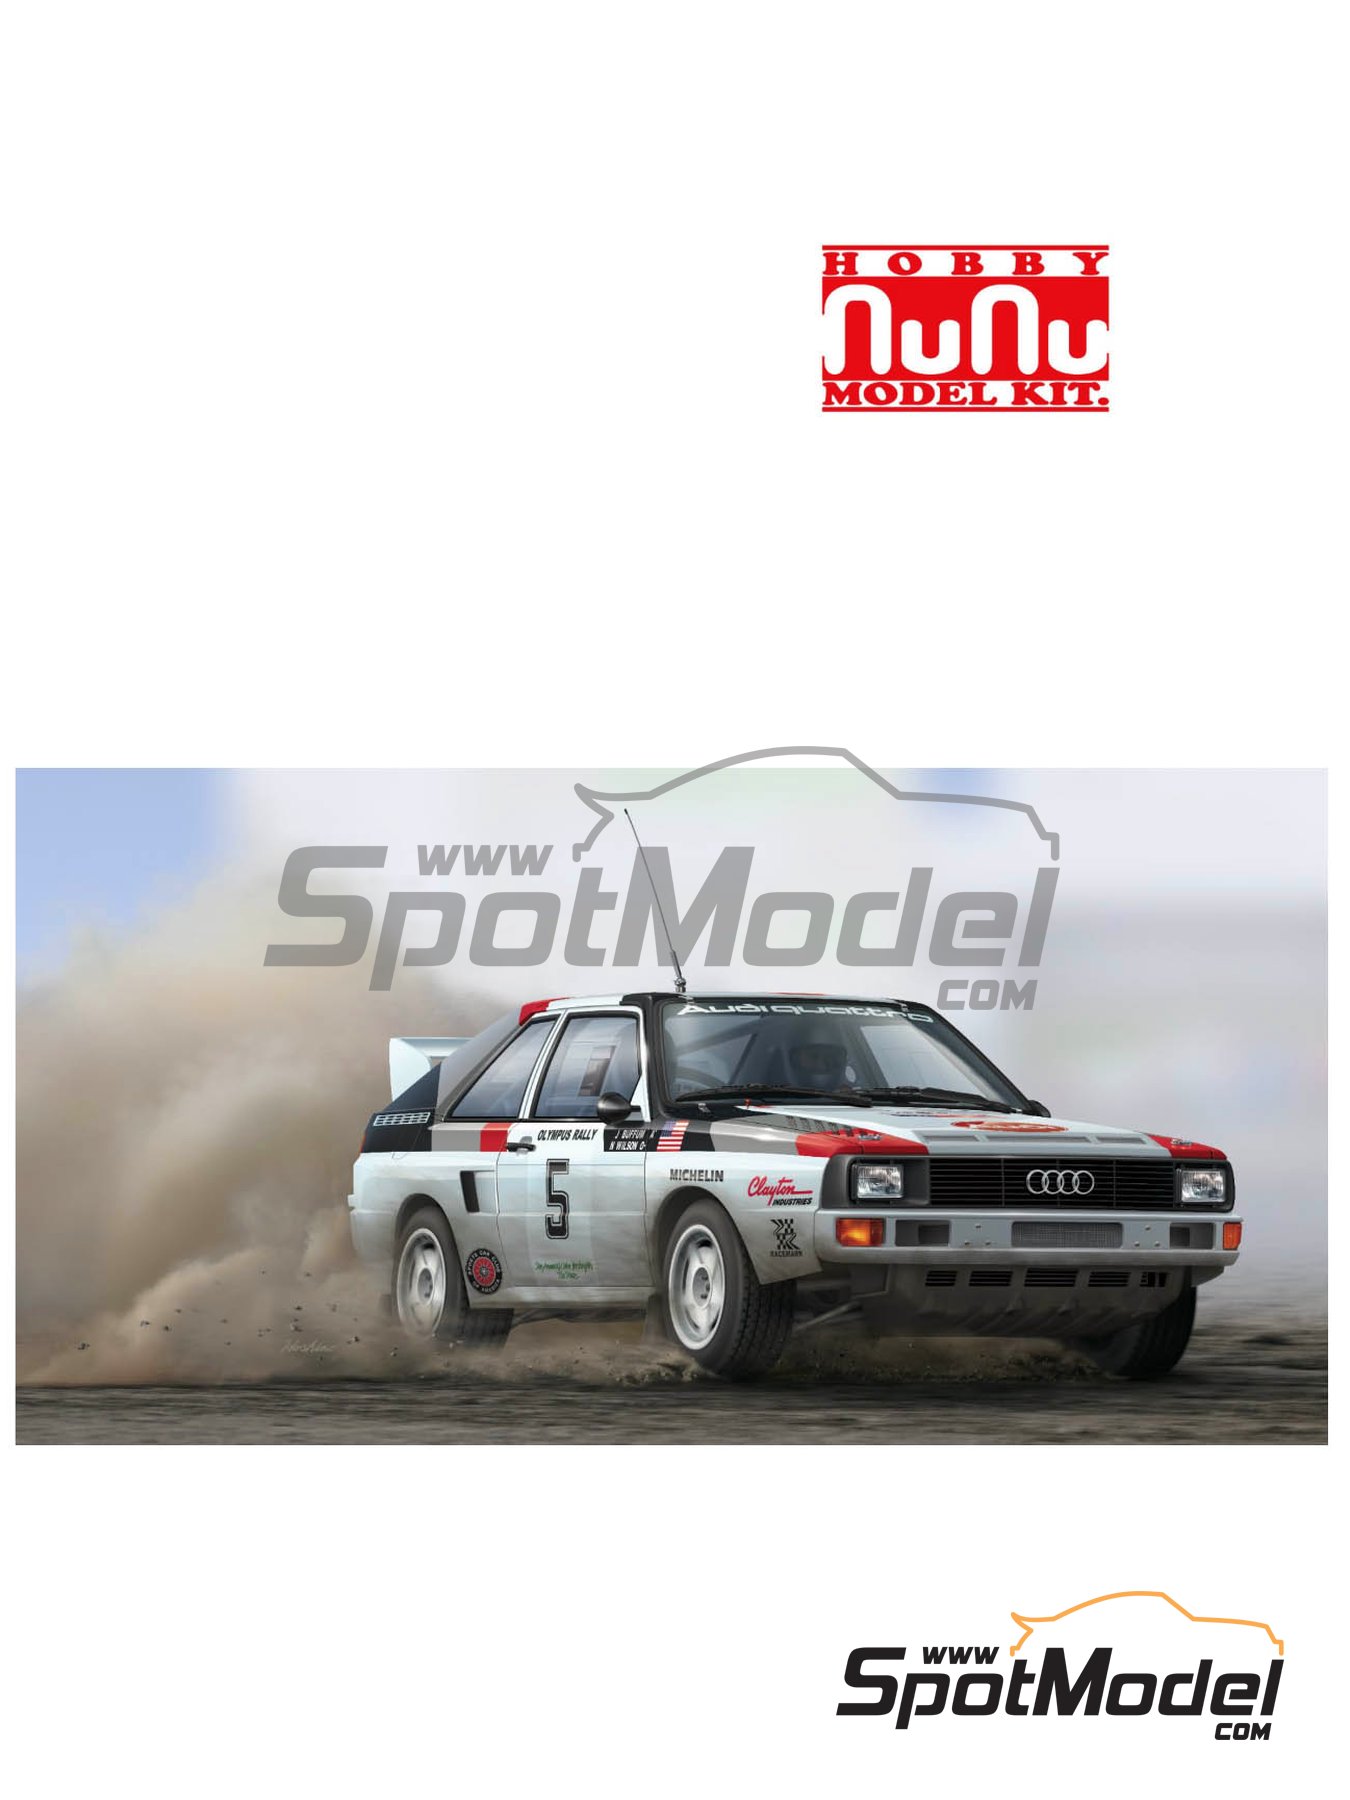 NuNu Platz Hobby Model Kit Item PN24023 S1 Rally 1986 1/24 Treppen-Set